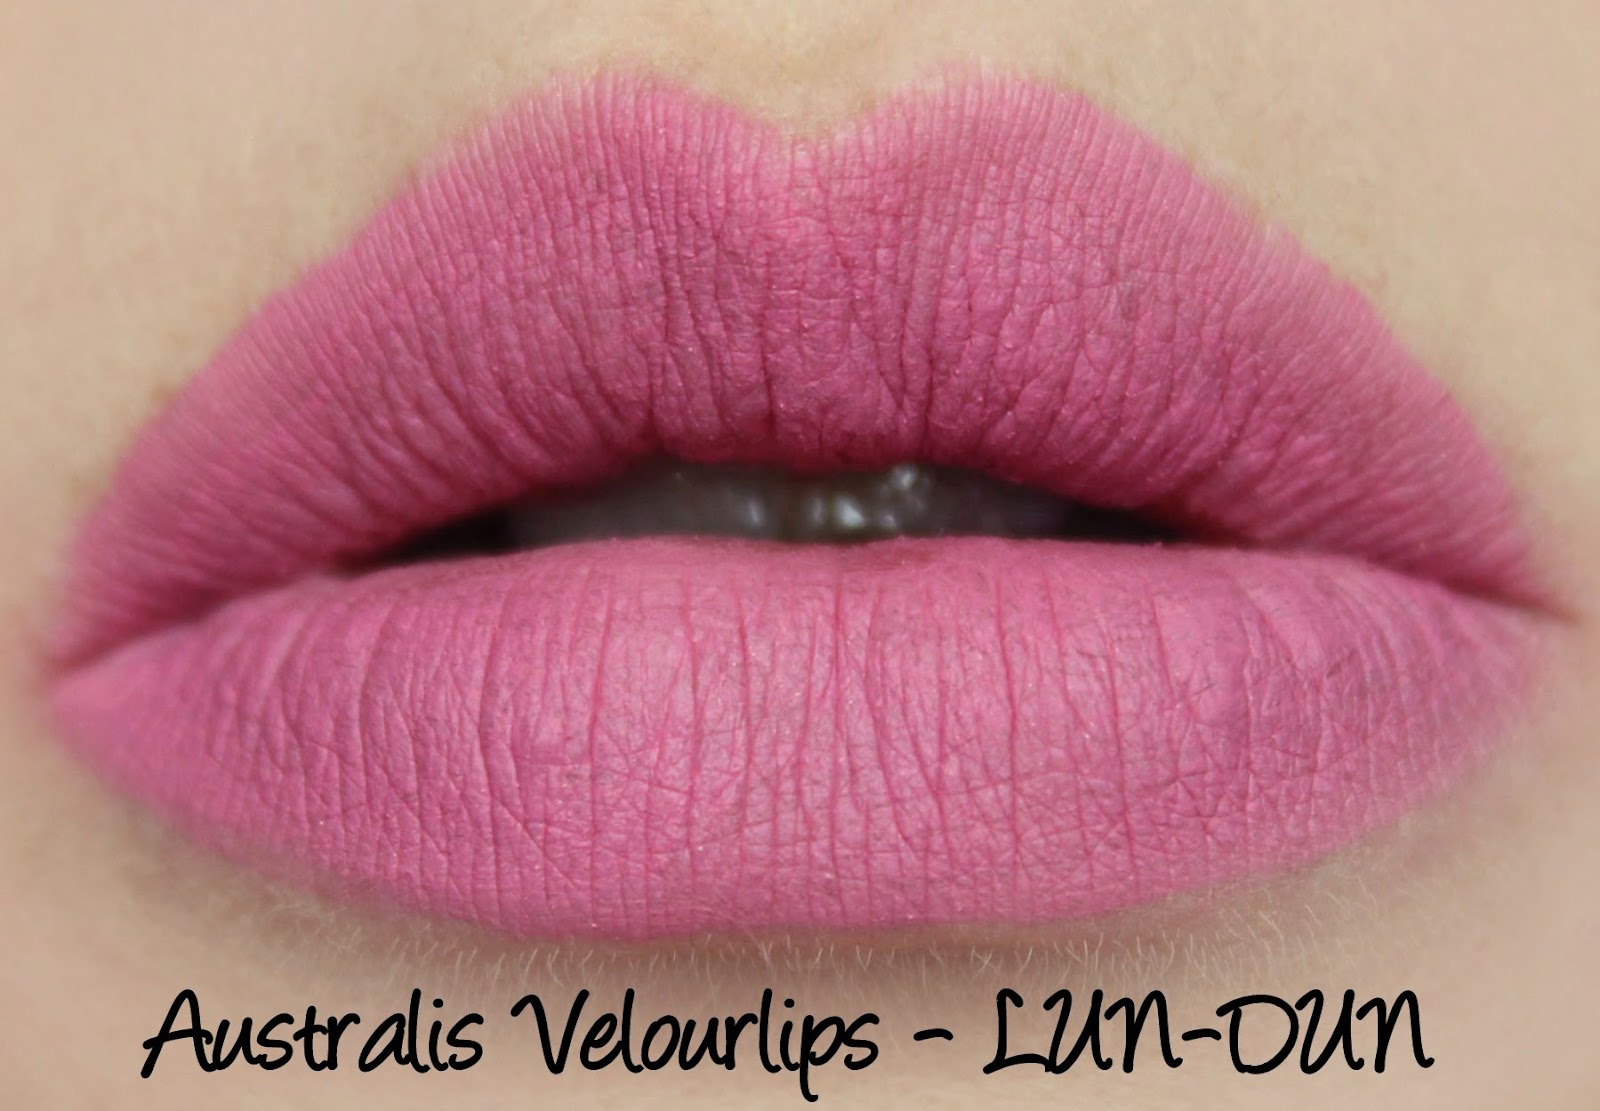 Australis Velourlips Matte Lip Cream - LUN-DUN Swatches & Review